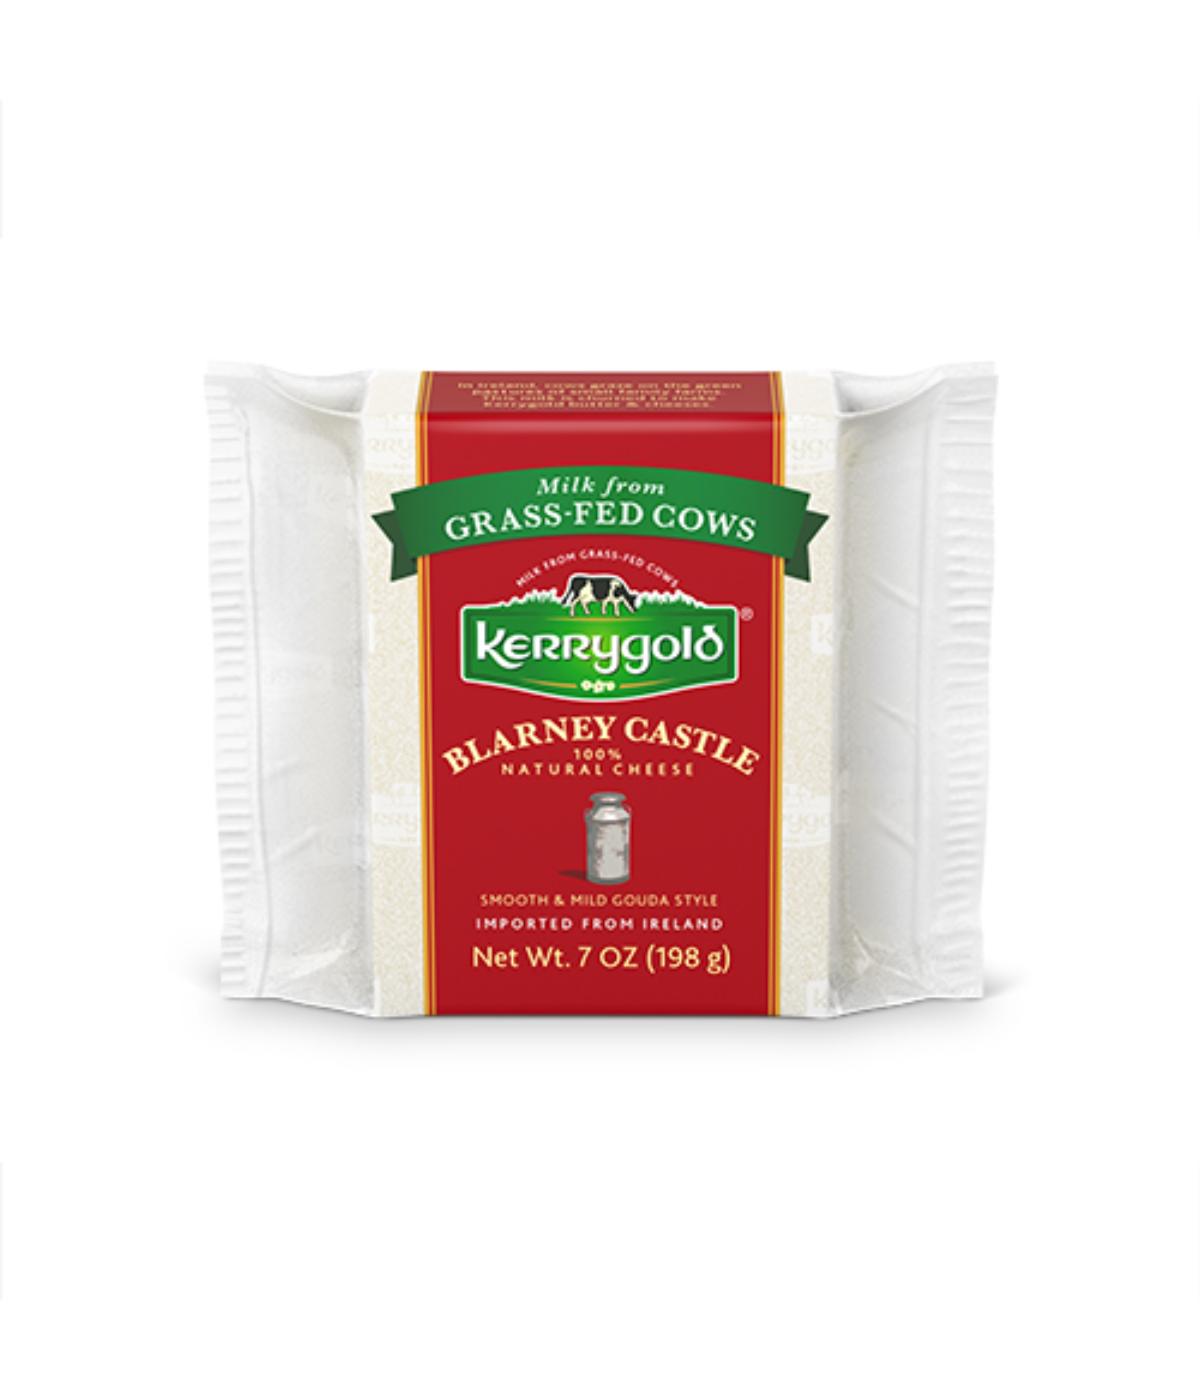 Kerrygold Grass-Fed Blarney Castle Irish Cheese; image 1 of 4